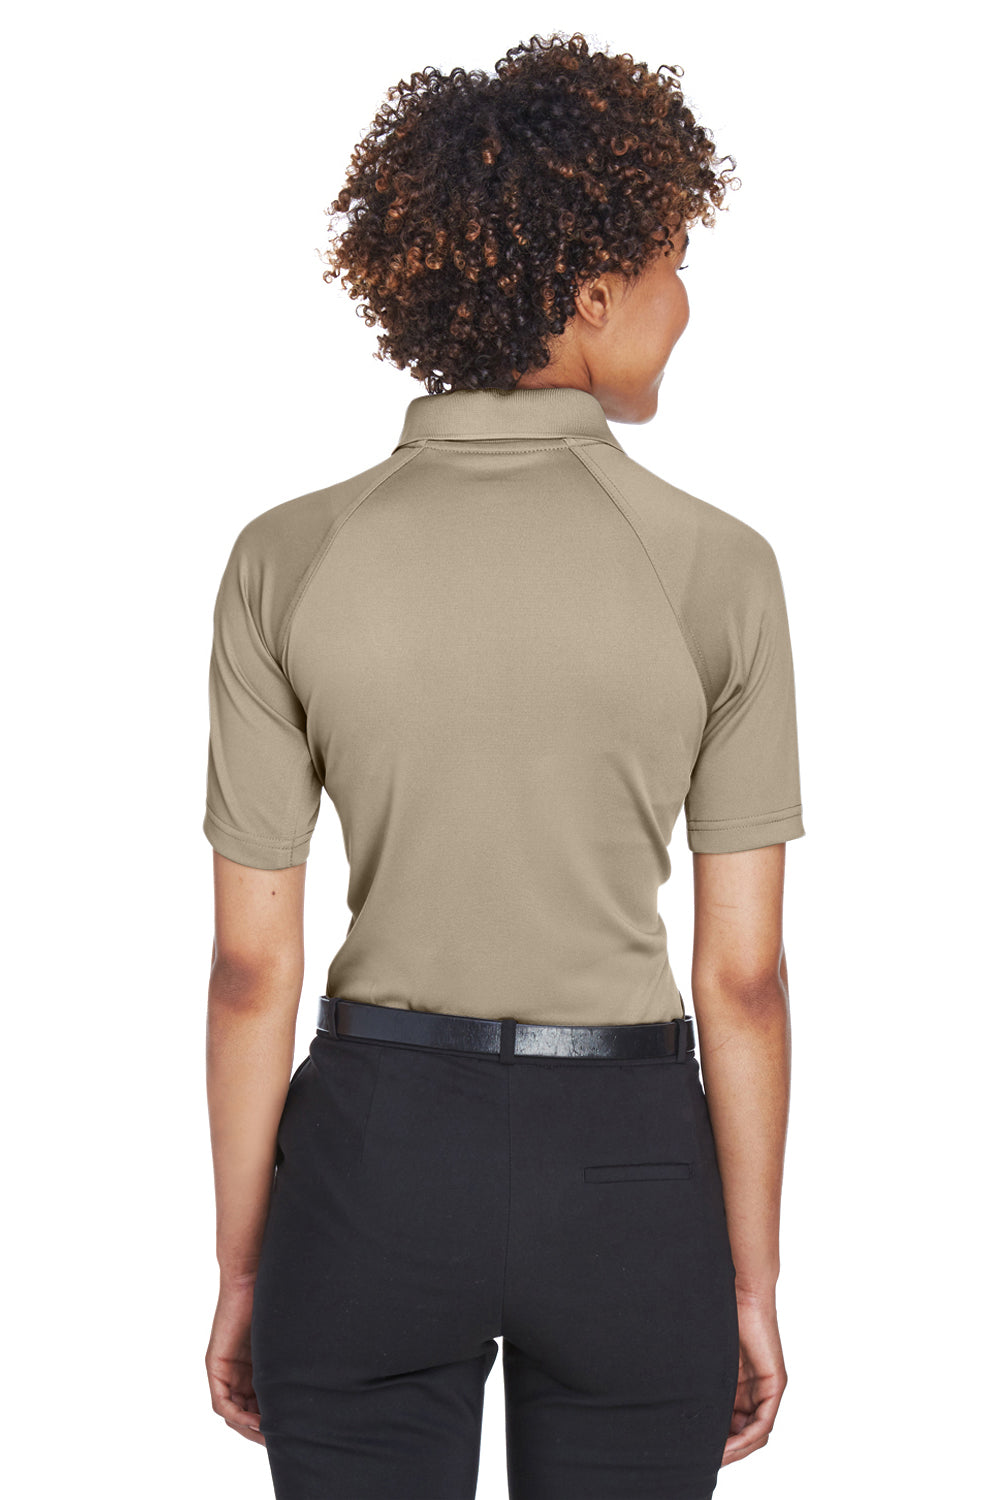 Harriton M211W Womens Advantage Tactical Moisture Wicking Short Sleeve Polo Shirt Khaki Brown Back